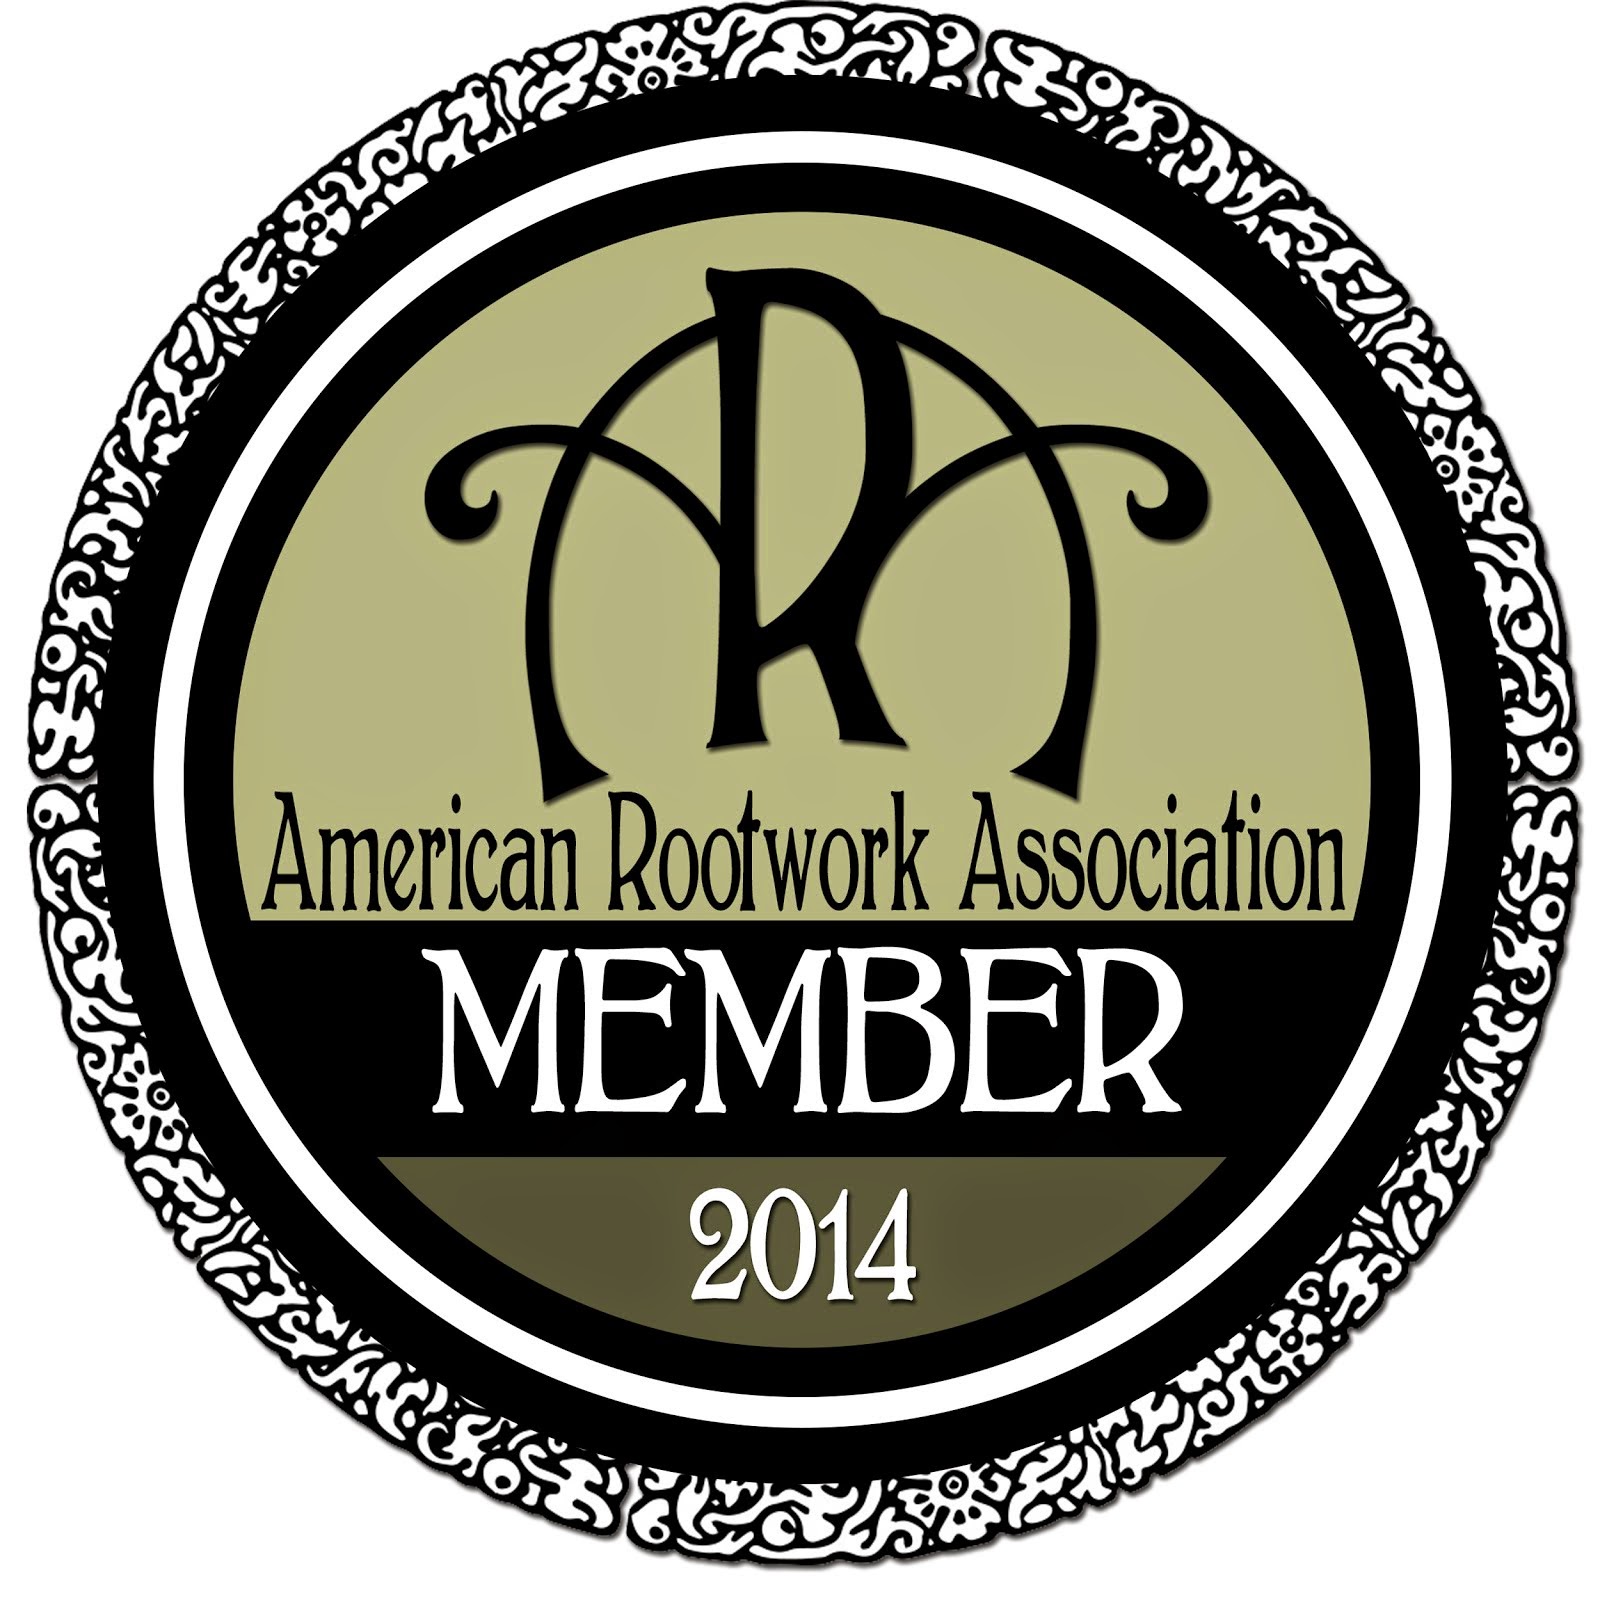 American Rootwork Association